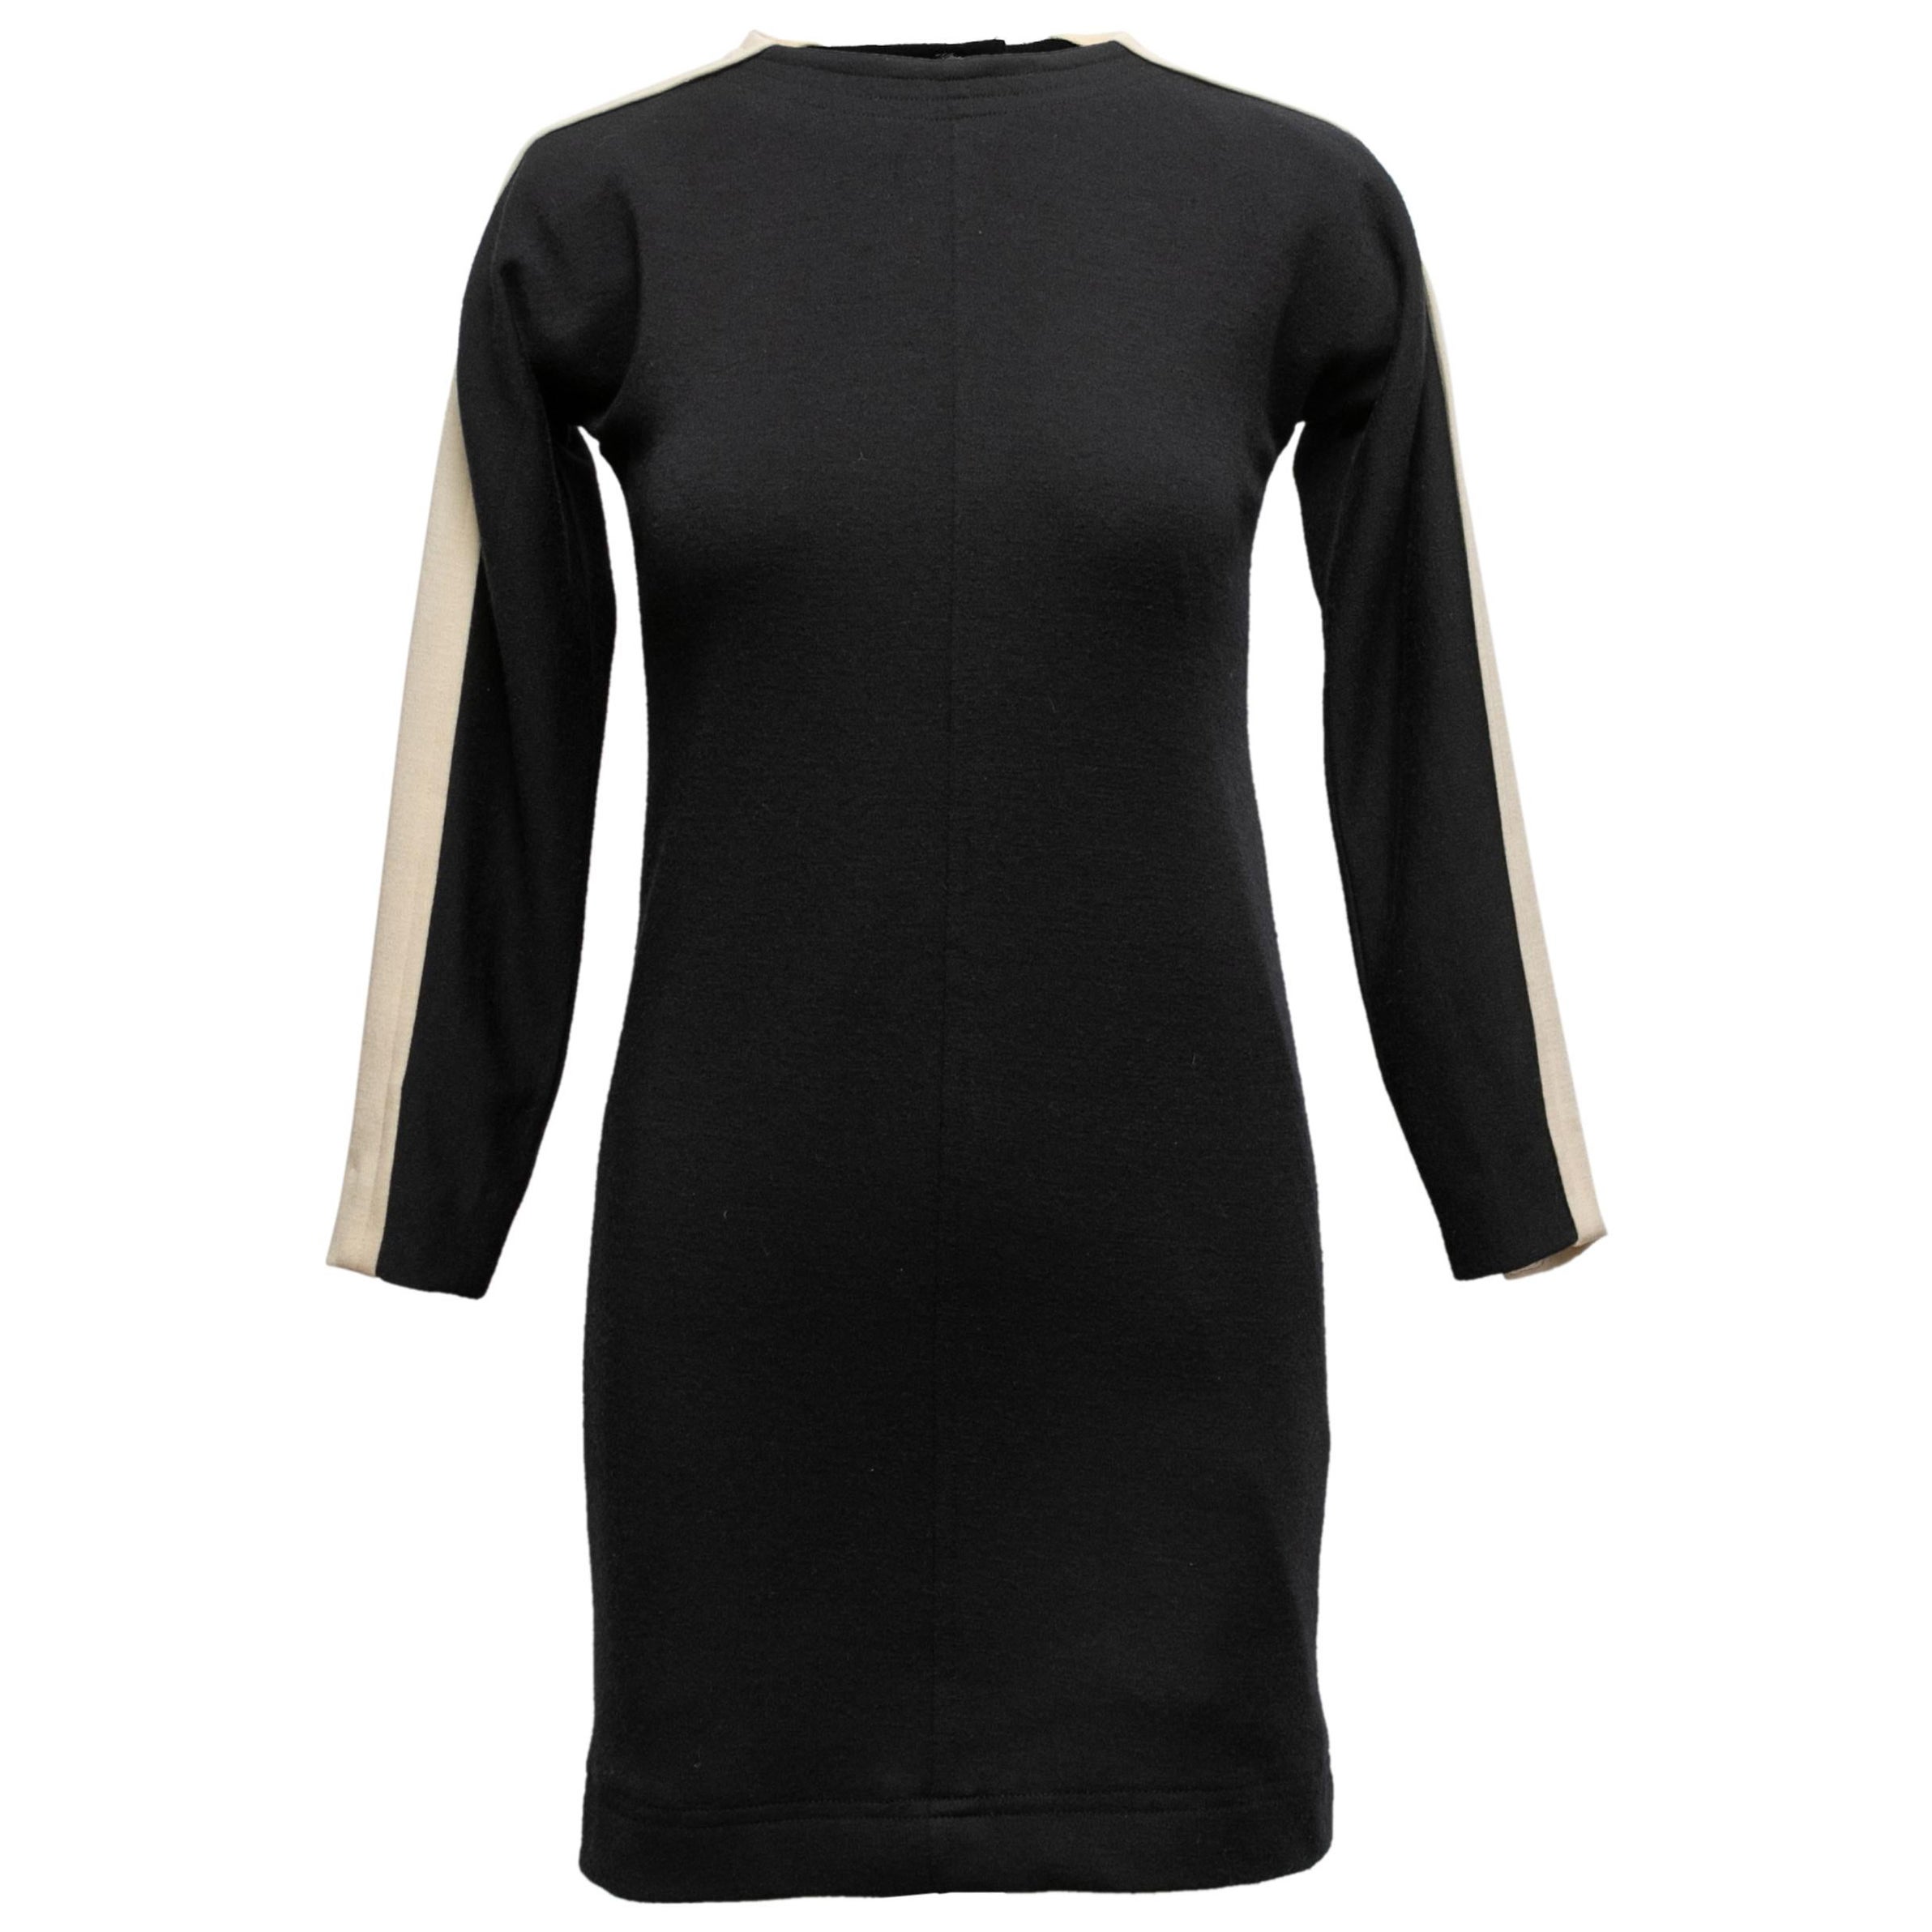 Vintage Black & White Yves Saint Laurent Wool Dress Size FR 38